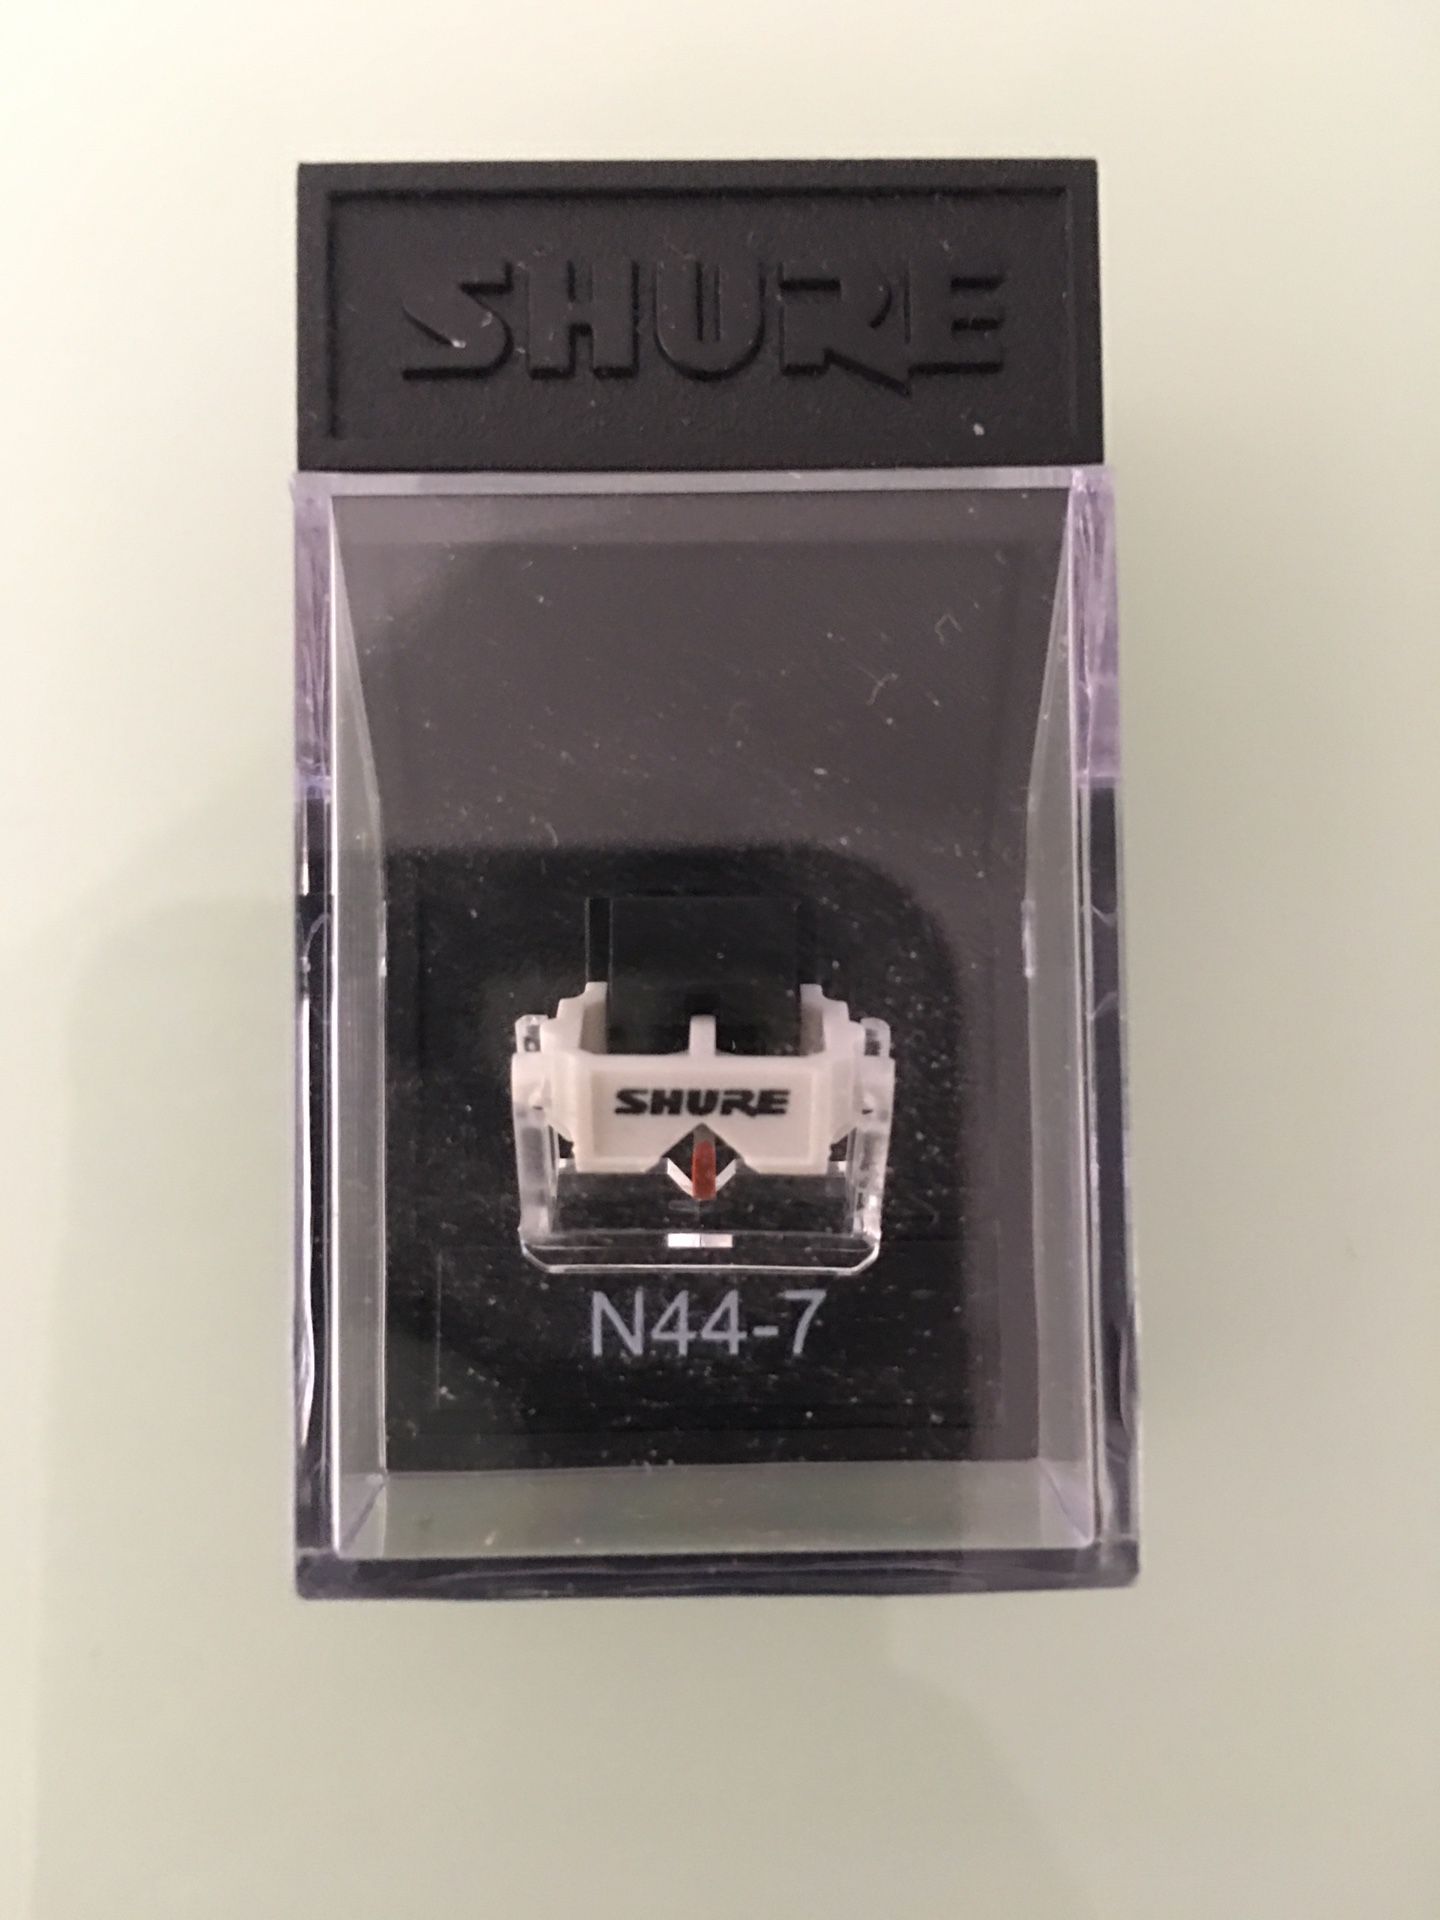 Shure n44-7 stylus for m44-7 cartridge